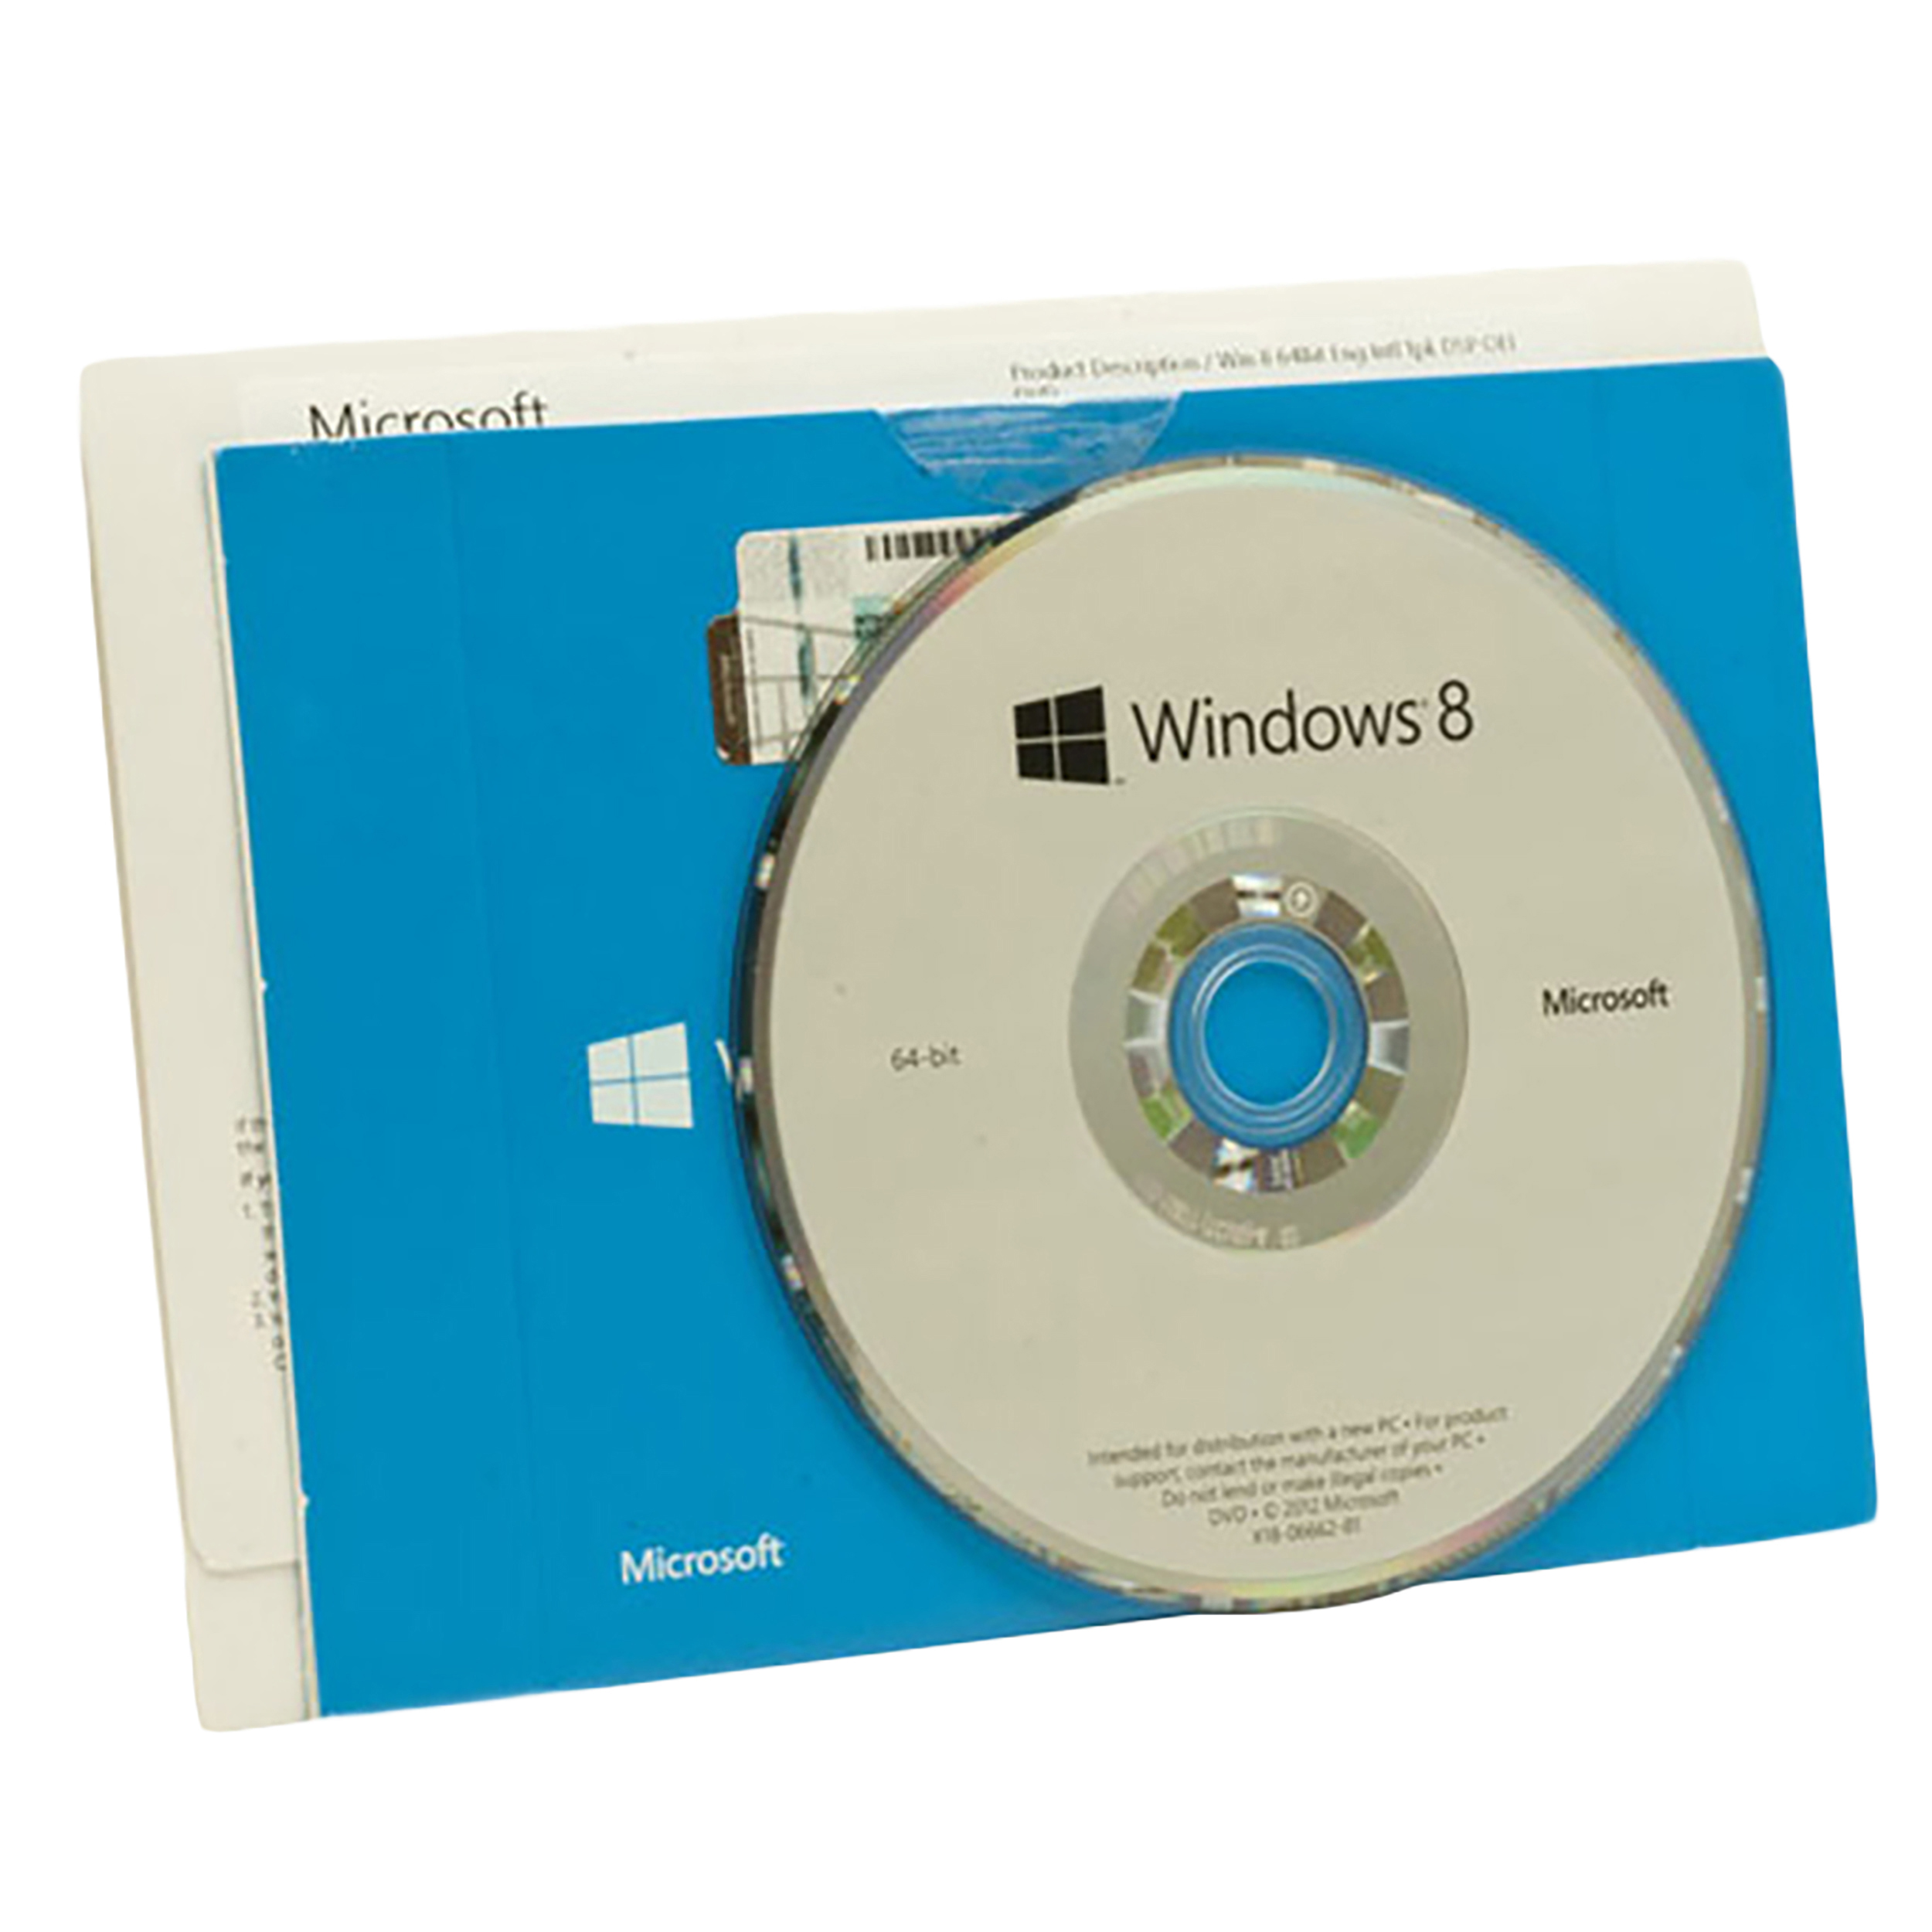 ویندوز 8 نسخه Professional نسخه کامل 64 بیتی